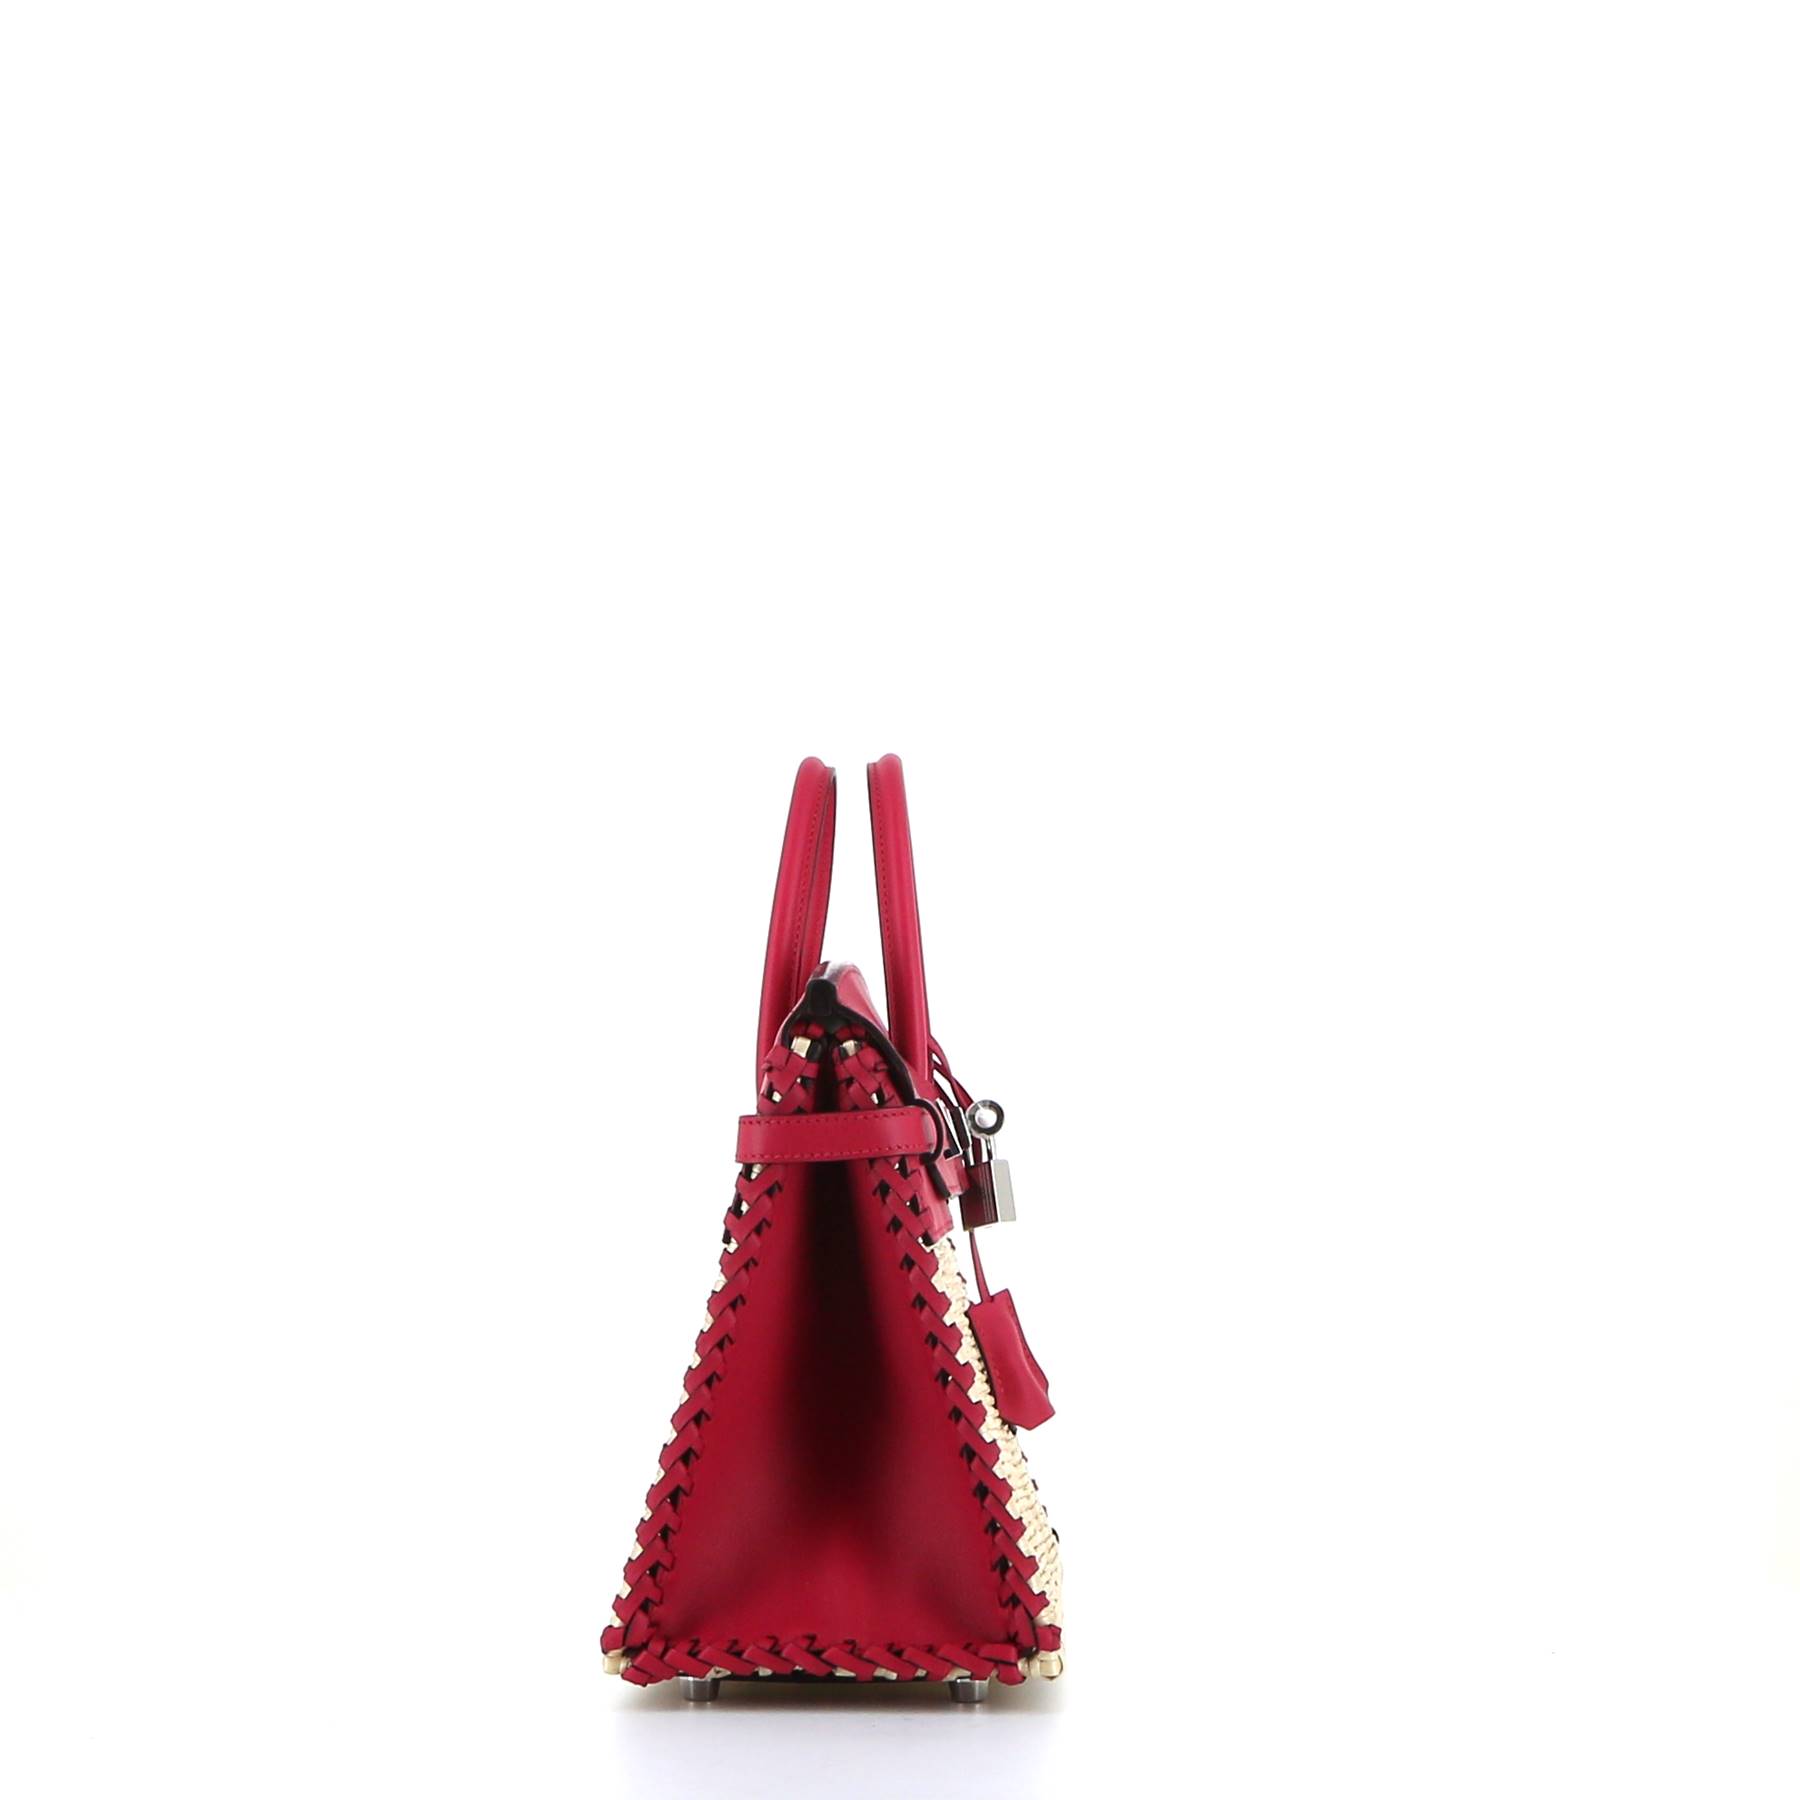 Birkin 25 cm Picnic Handbag In Raspberry Pink Swift Leather And